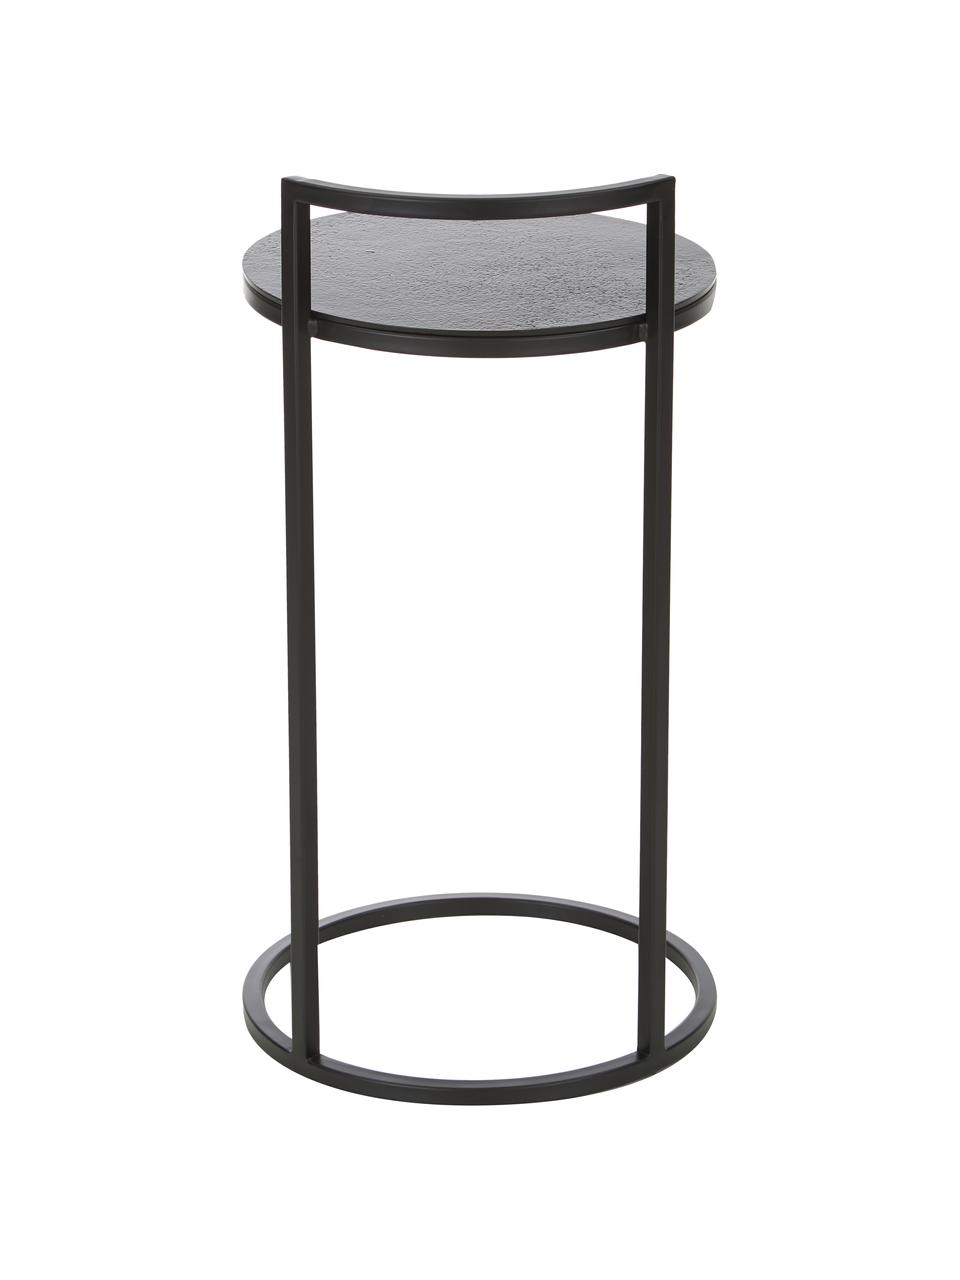 Runder Beistelltisch Circle aus Metall, Tischplatte: Metall, beschichtet, Gestell: Metall, pulverbeschichtet, Tischplatte: Schwarz mit Antik-Finish Gestell: Schwarz, matt, Ø 36 x H 66 cm